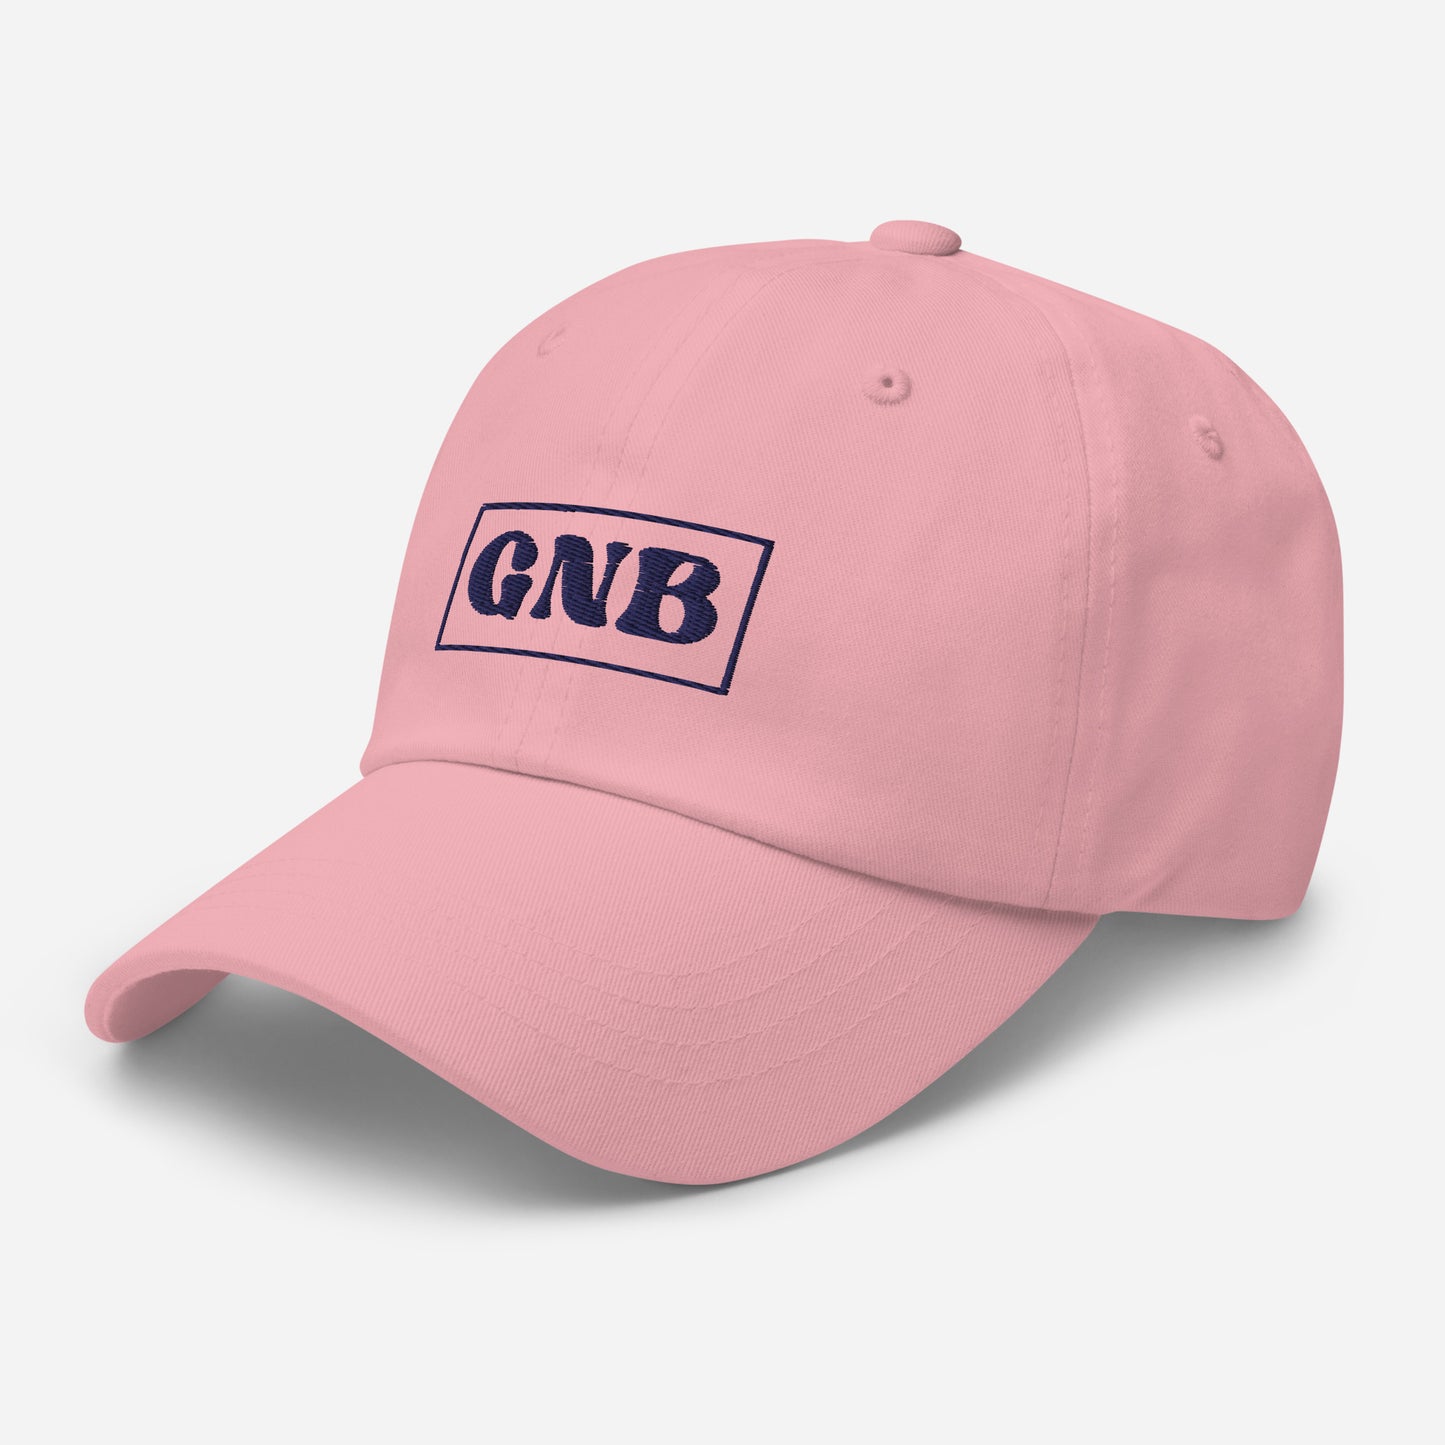 GNB - Jesus Life Hat